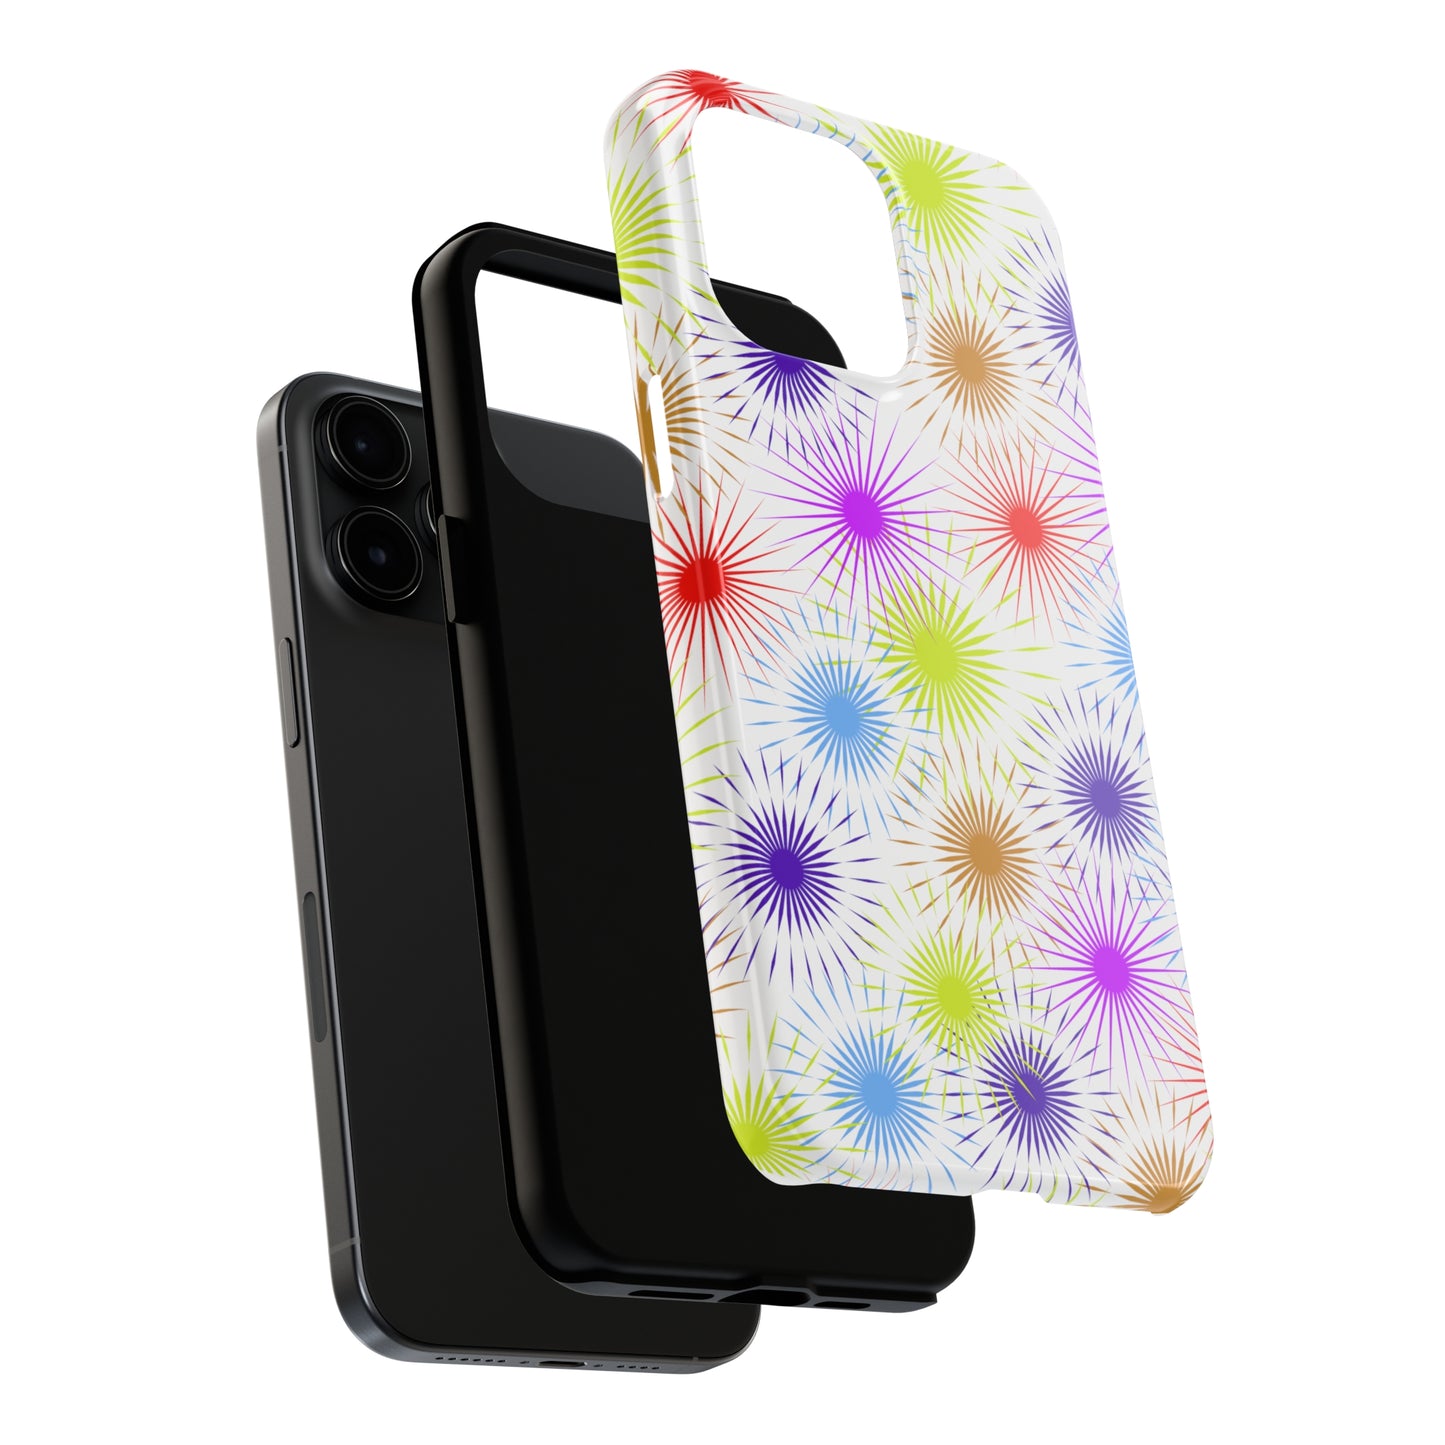 Glitter Bomb: iPhone - Tough iPhone Case Design - Wireless Charging - Superior Protection - Original Designs by TheGlassyLass.com